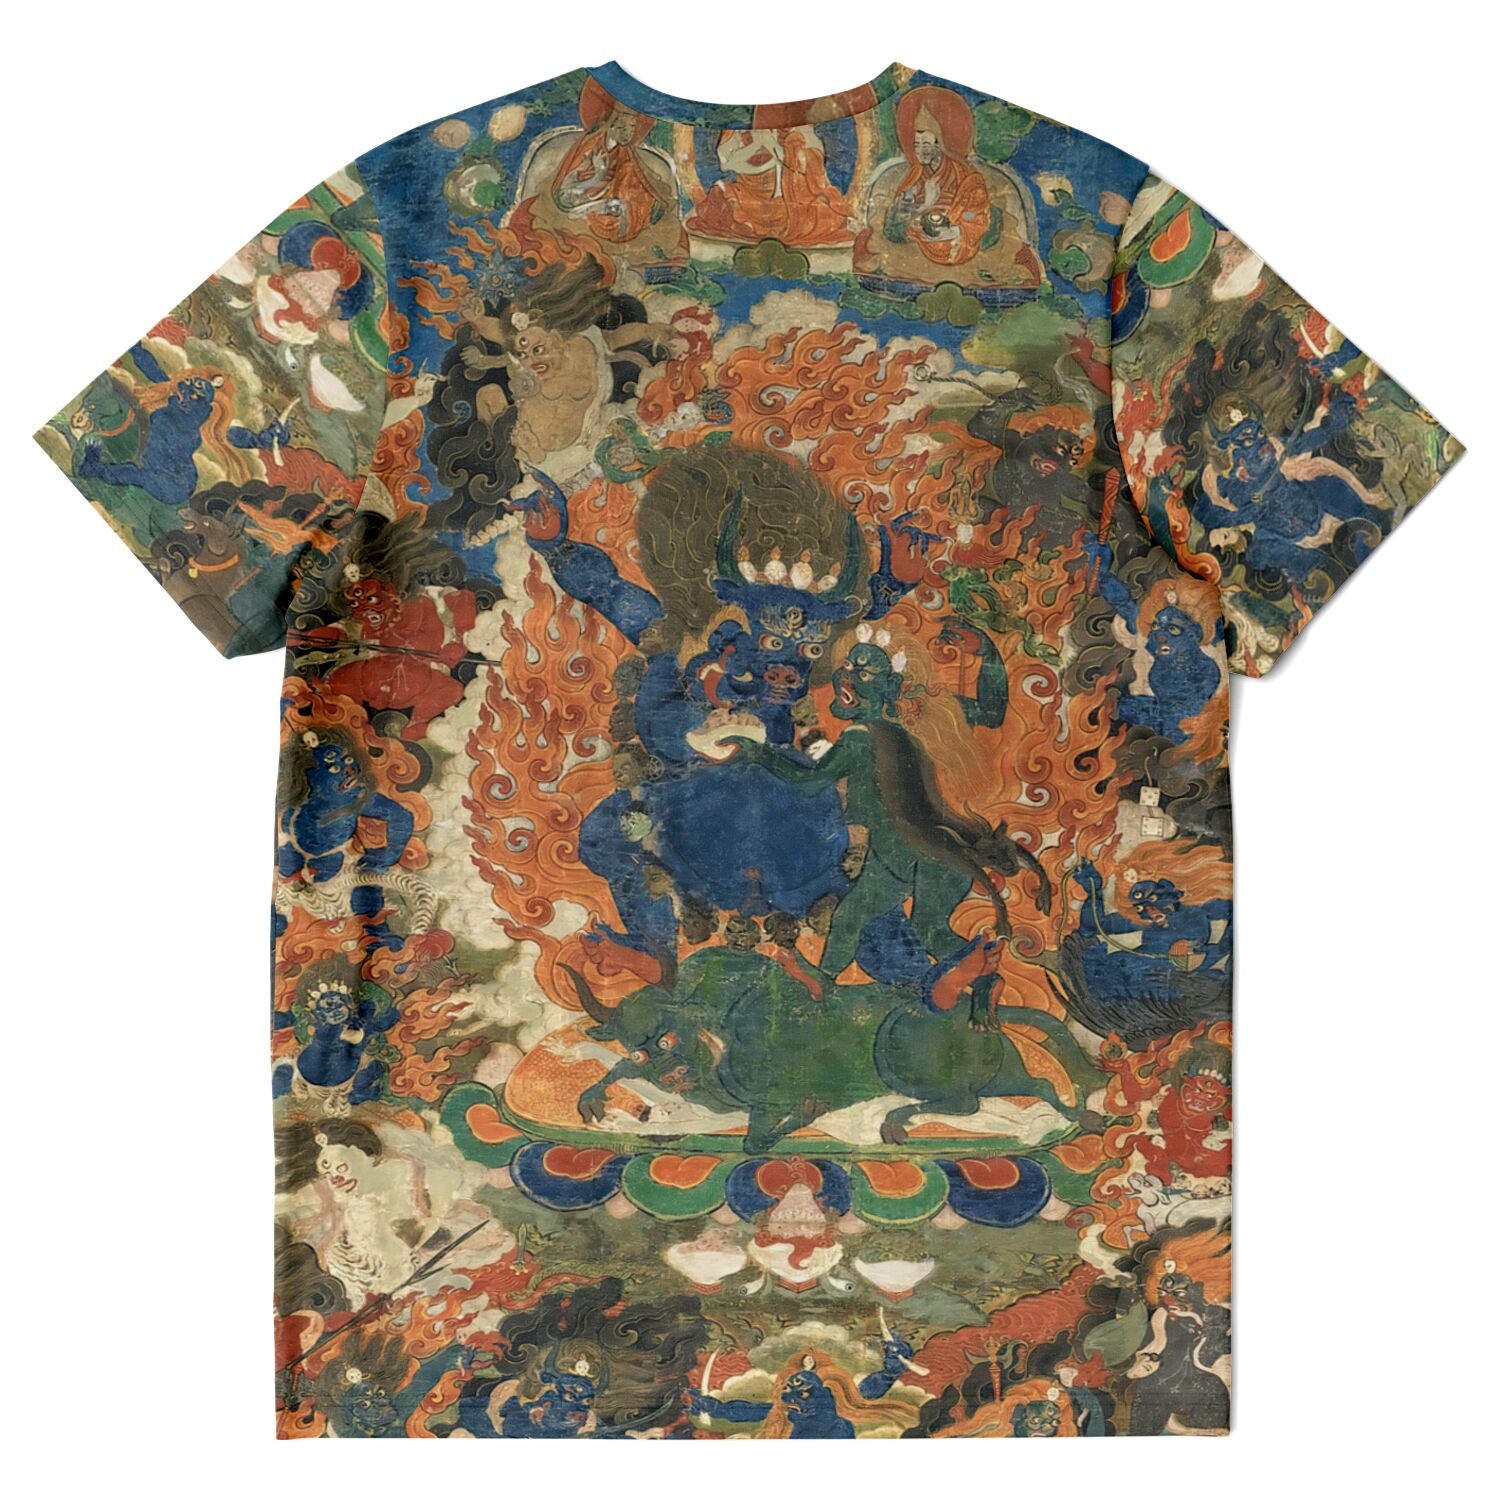 T-shirt Yama Dharmaraja Wrathful Deity | Antique-Aged Tibetan Spiritual Thangka, Alidhasana Meditation Deity Graphic Art T-Shirt